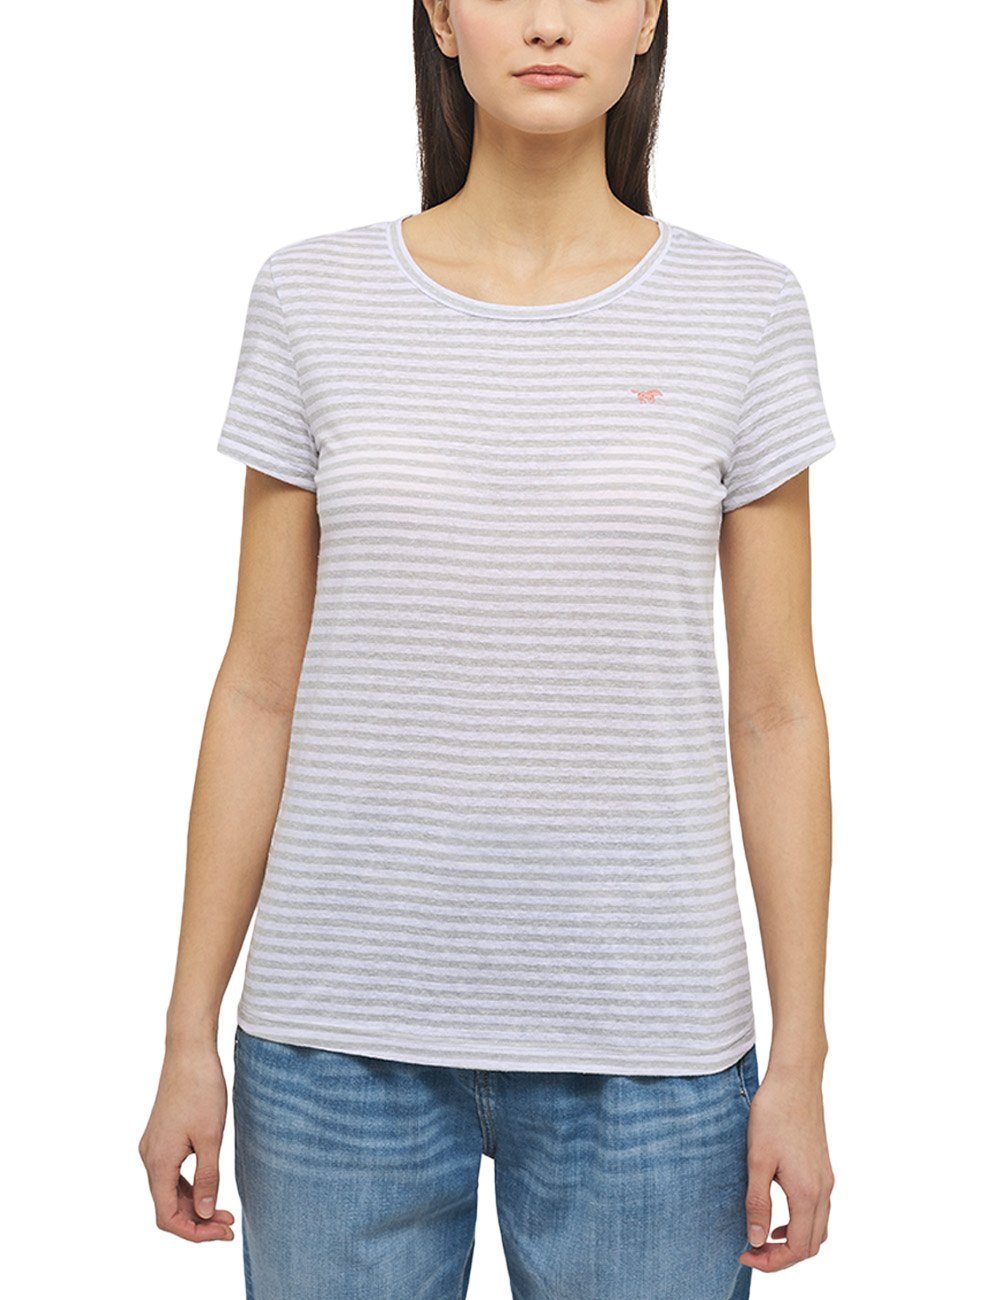 Stripe C Alexia MUSTANG T-Shirt